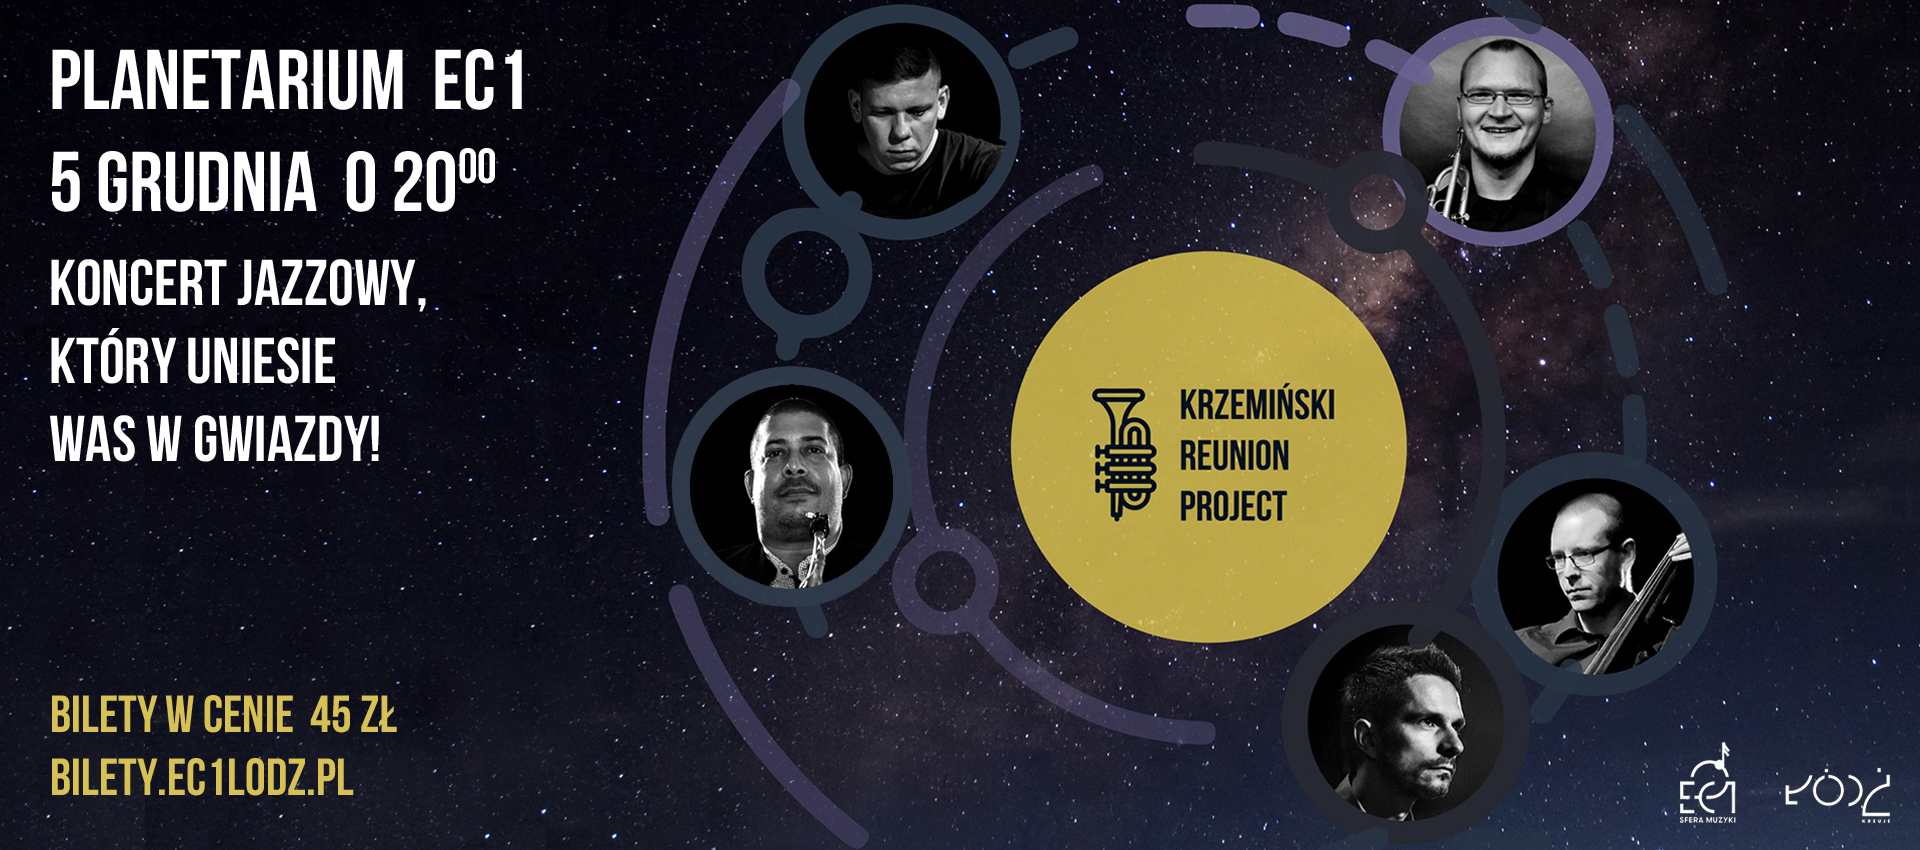 Krzemiński Reunion Project w Planetarium EC1